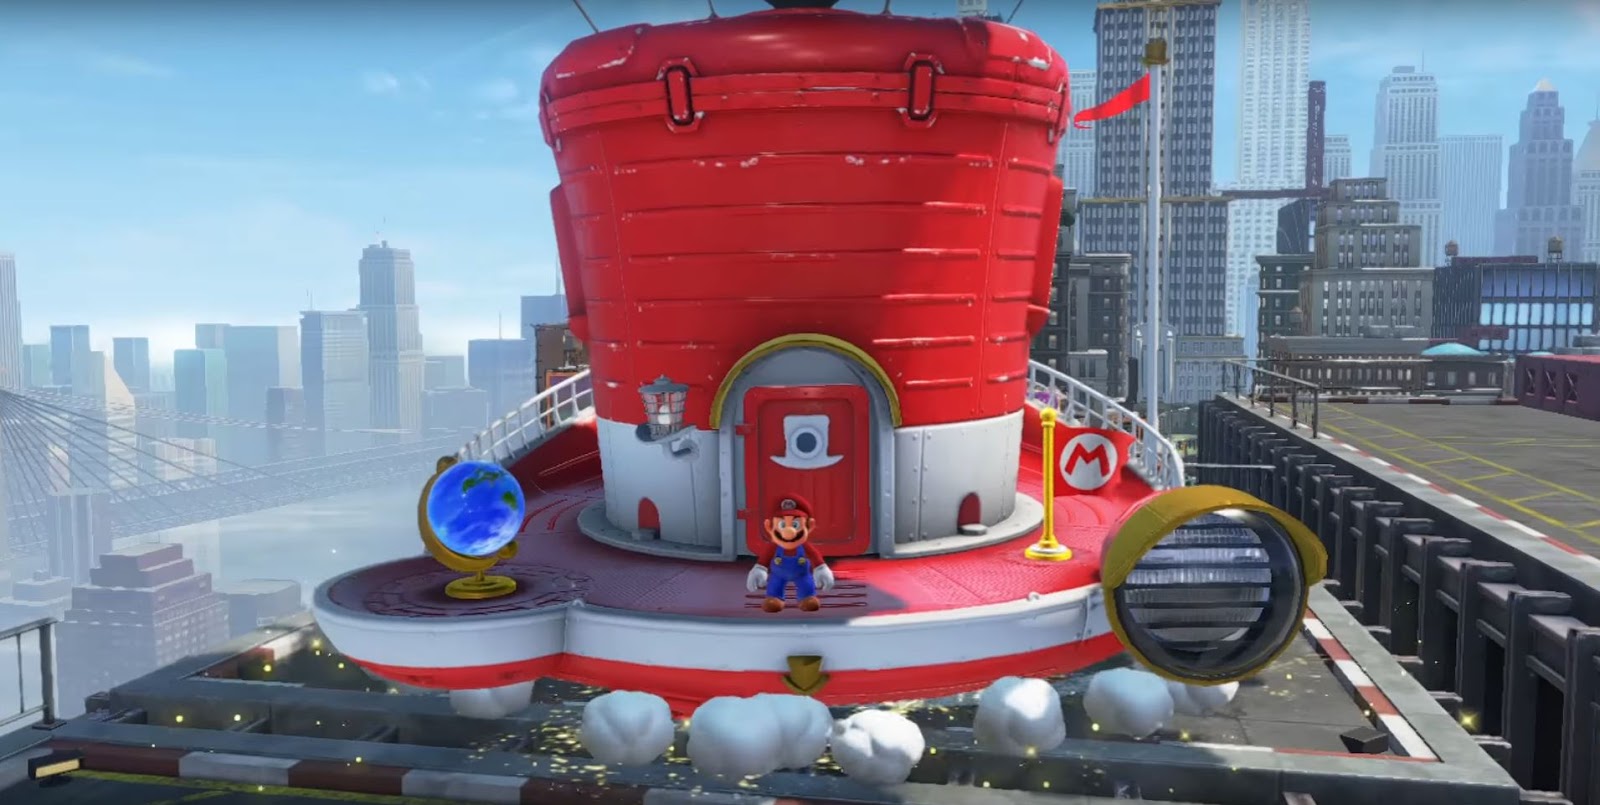 Super Mario Odyssey - Nintendo Switch Presentation 2017 Trailer on Vimeo